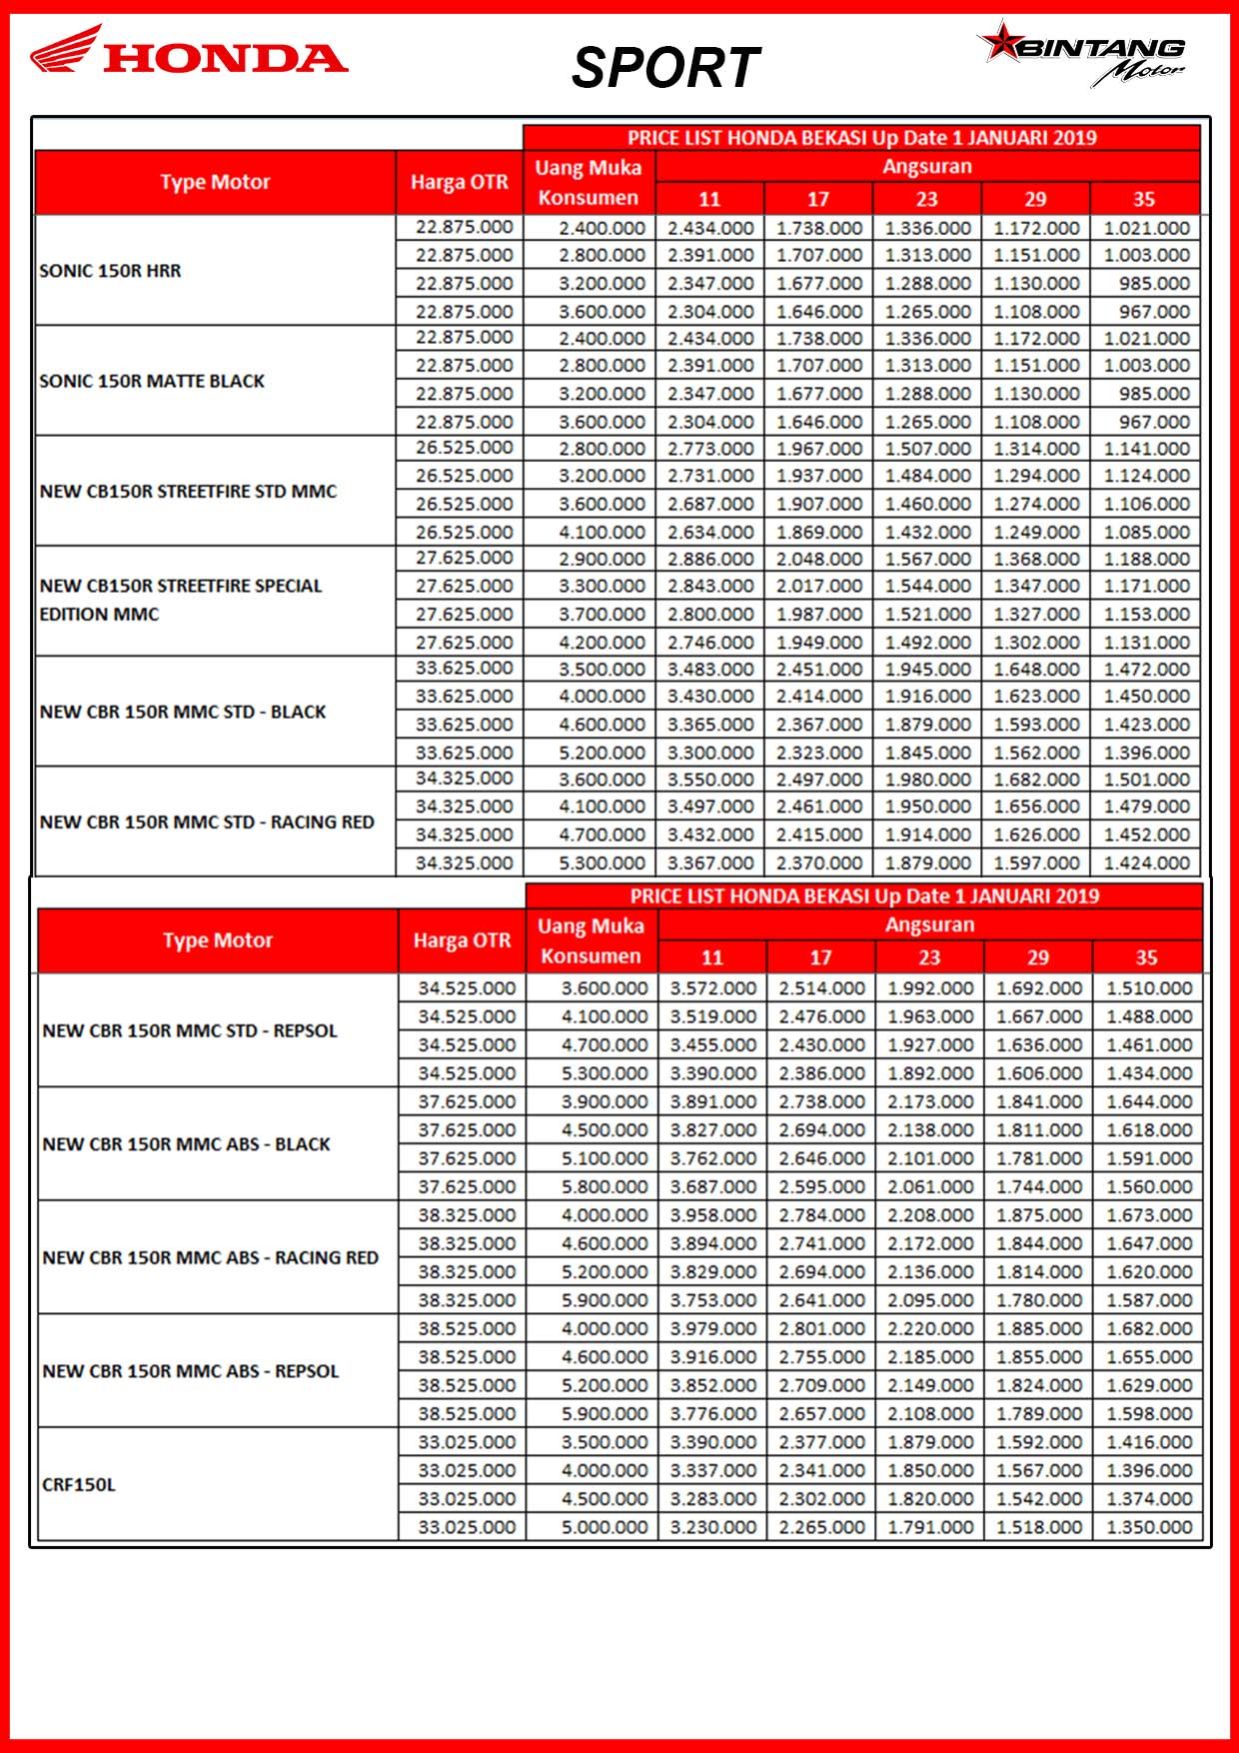 Price List Honda Bintang Motor Cikarang Honda Bintang Motor